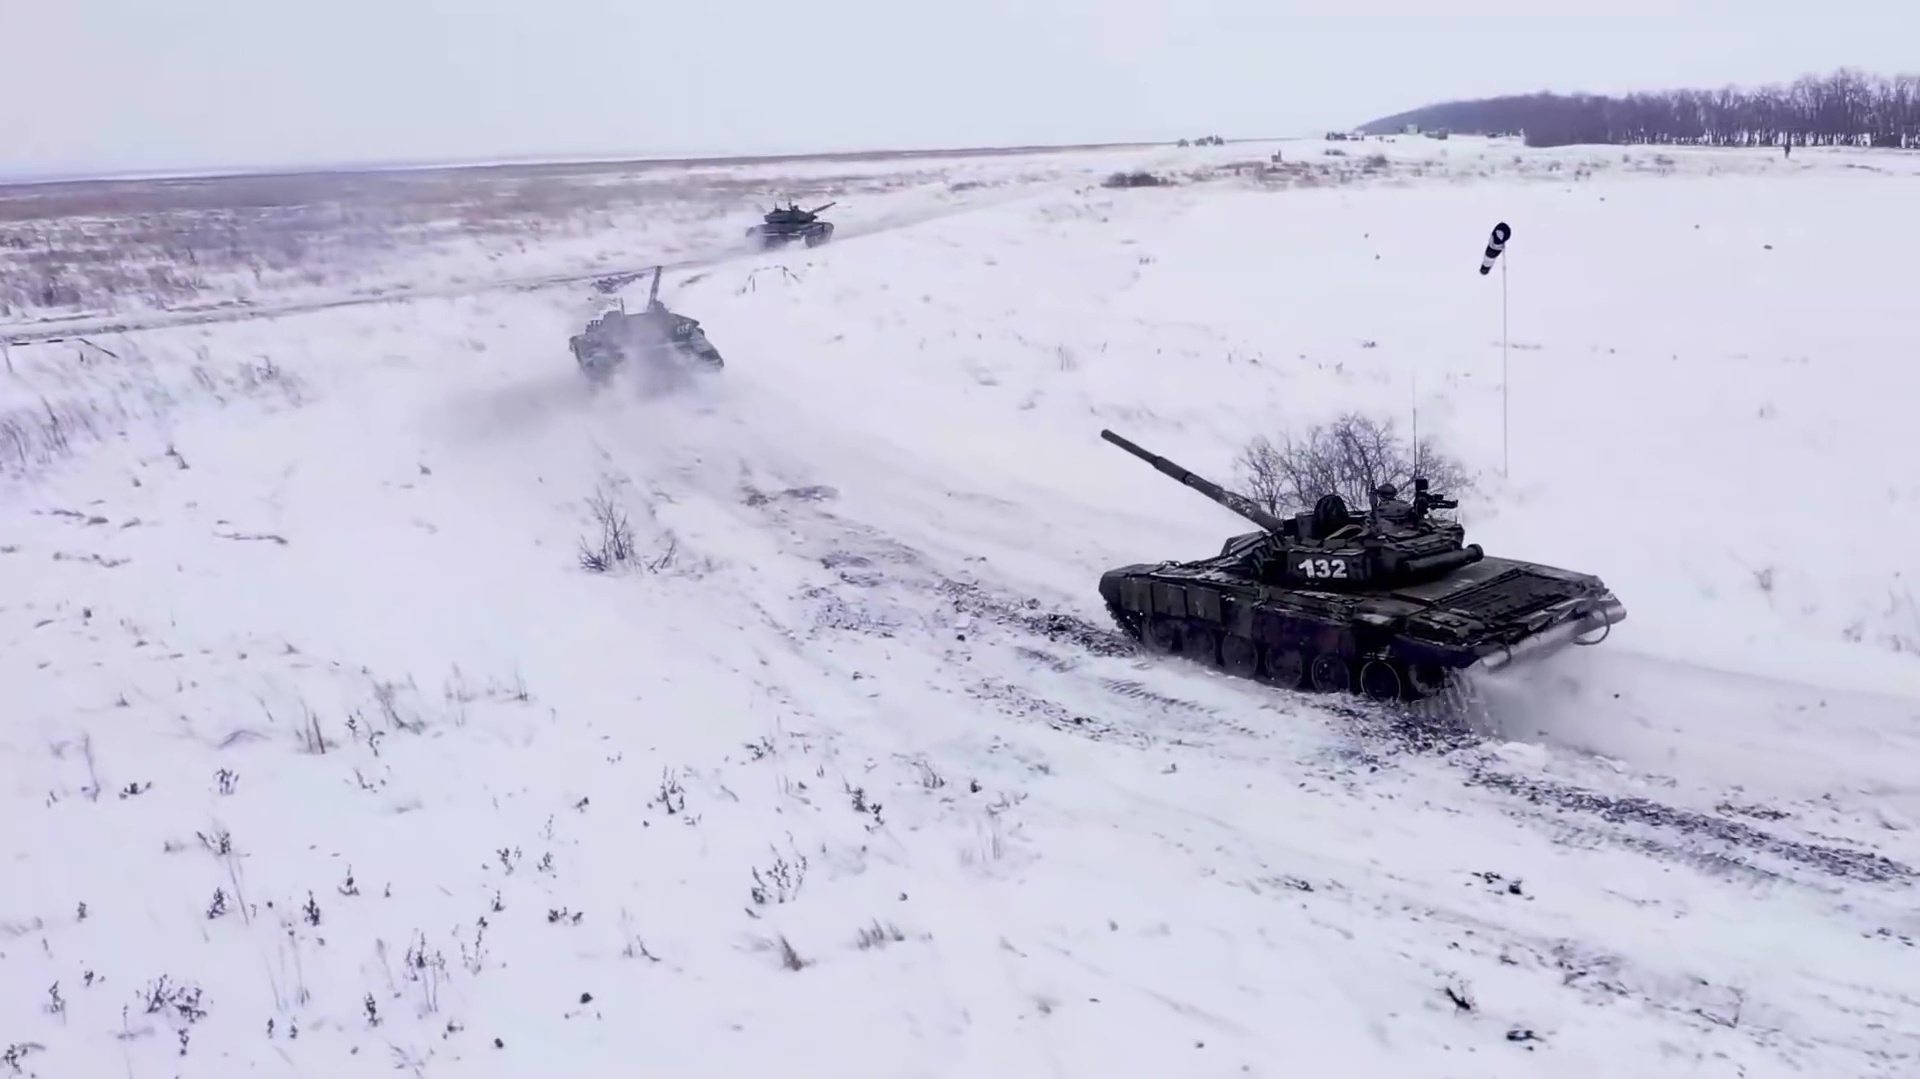 T-72B3 Main Battle Tanks in military drill in Russia